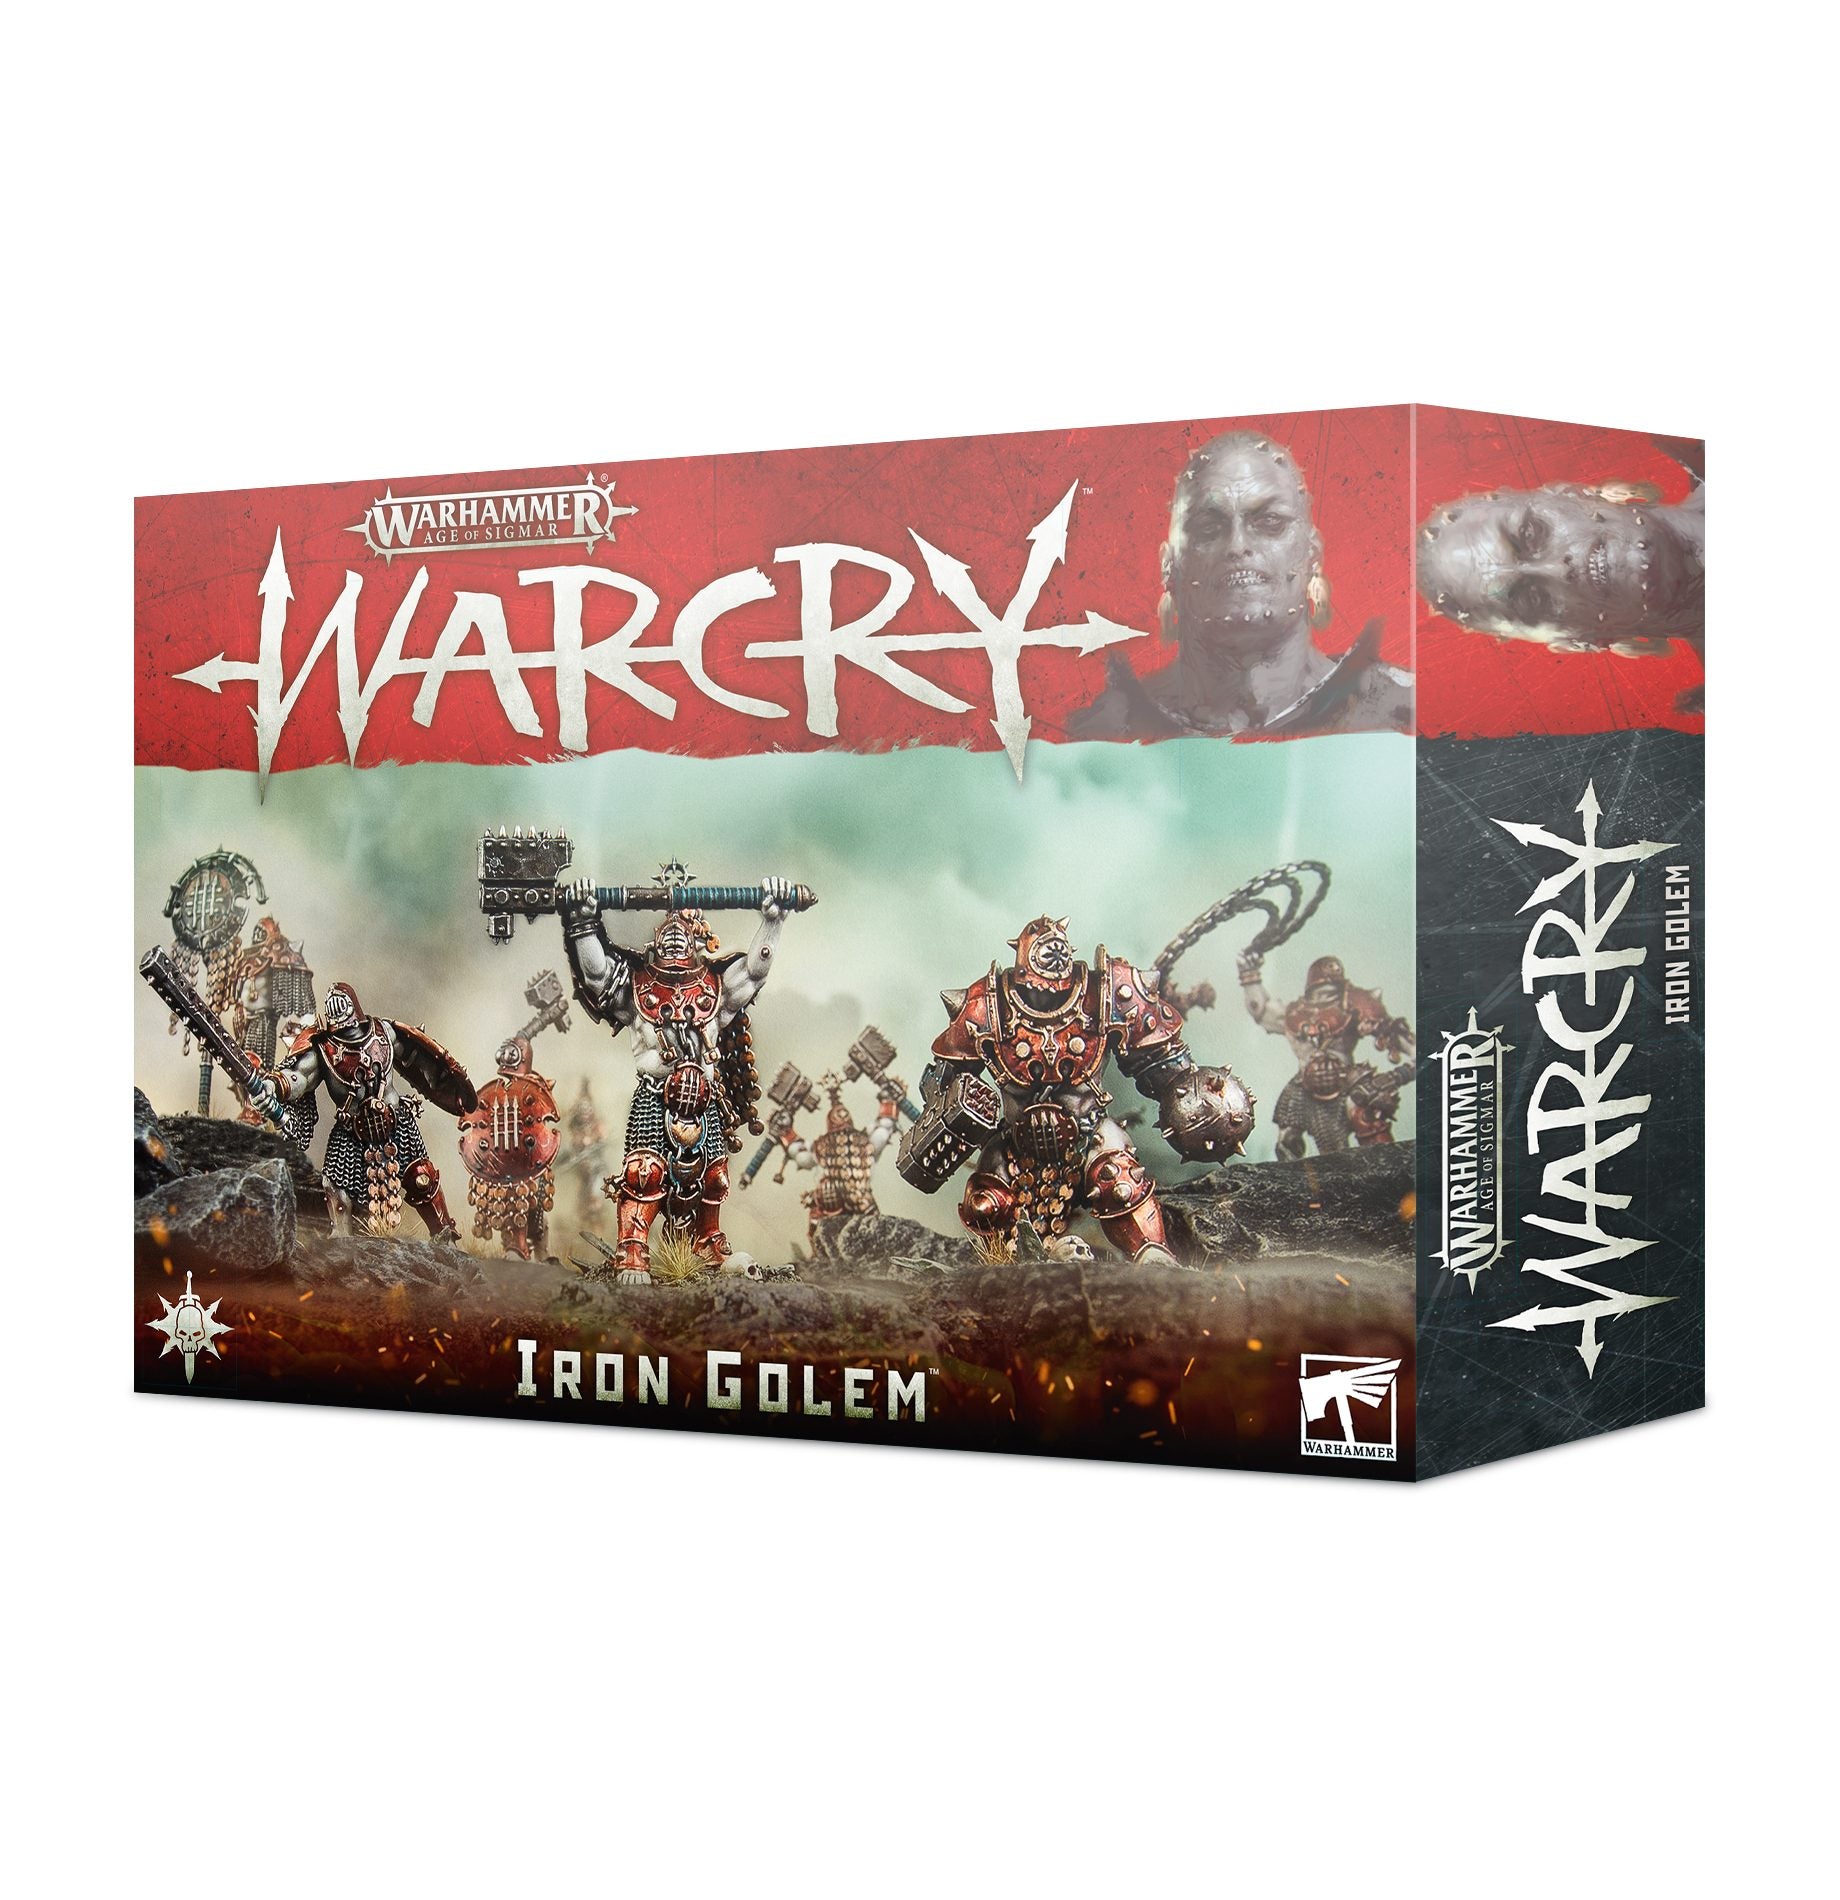 Warhammer Age of Sigmar: Warcry: Iron Golem